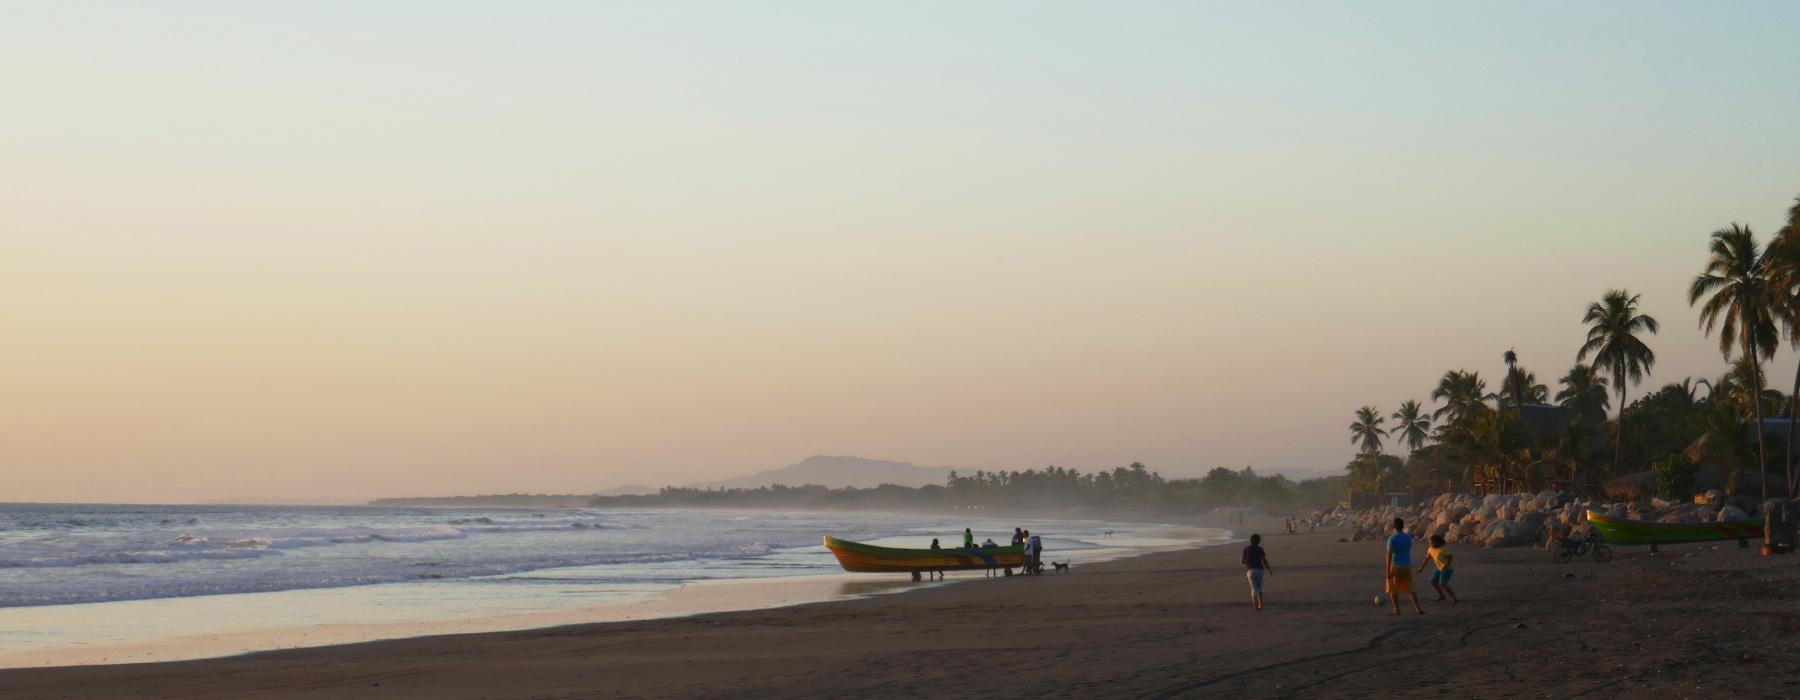 Nicaragua<br class="hidden-md hidden-lg" /> Luxury Adventure Holidays